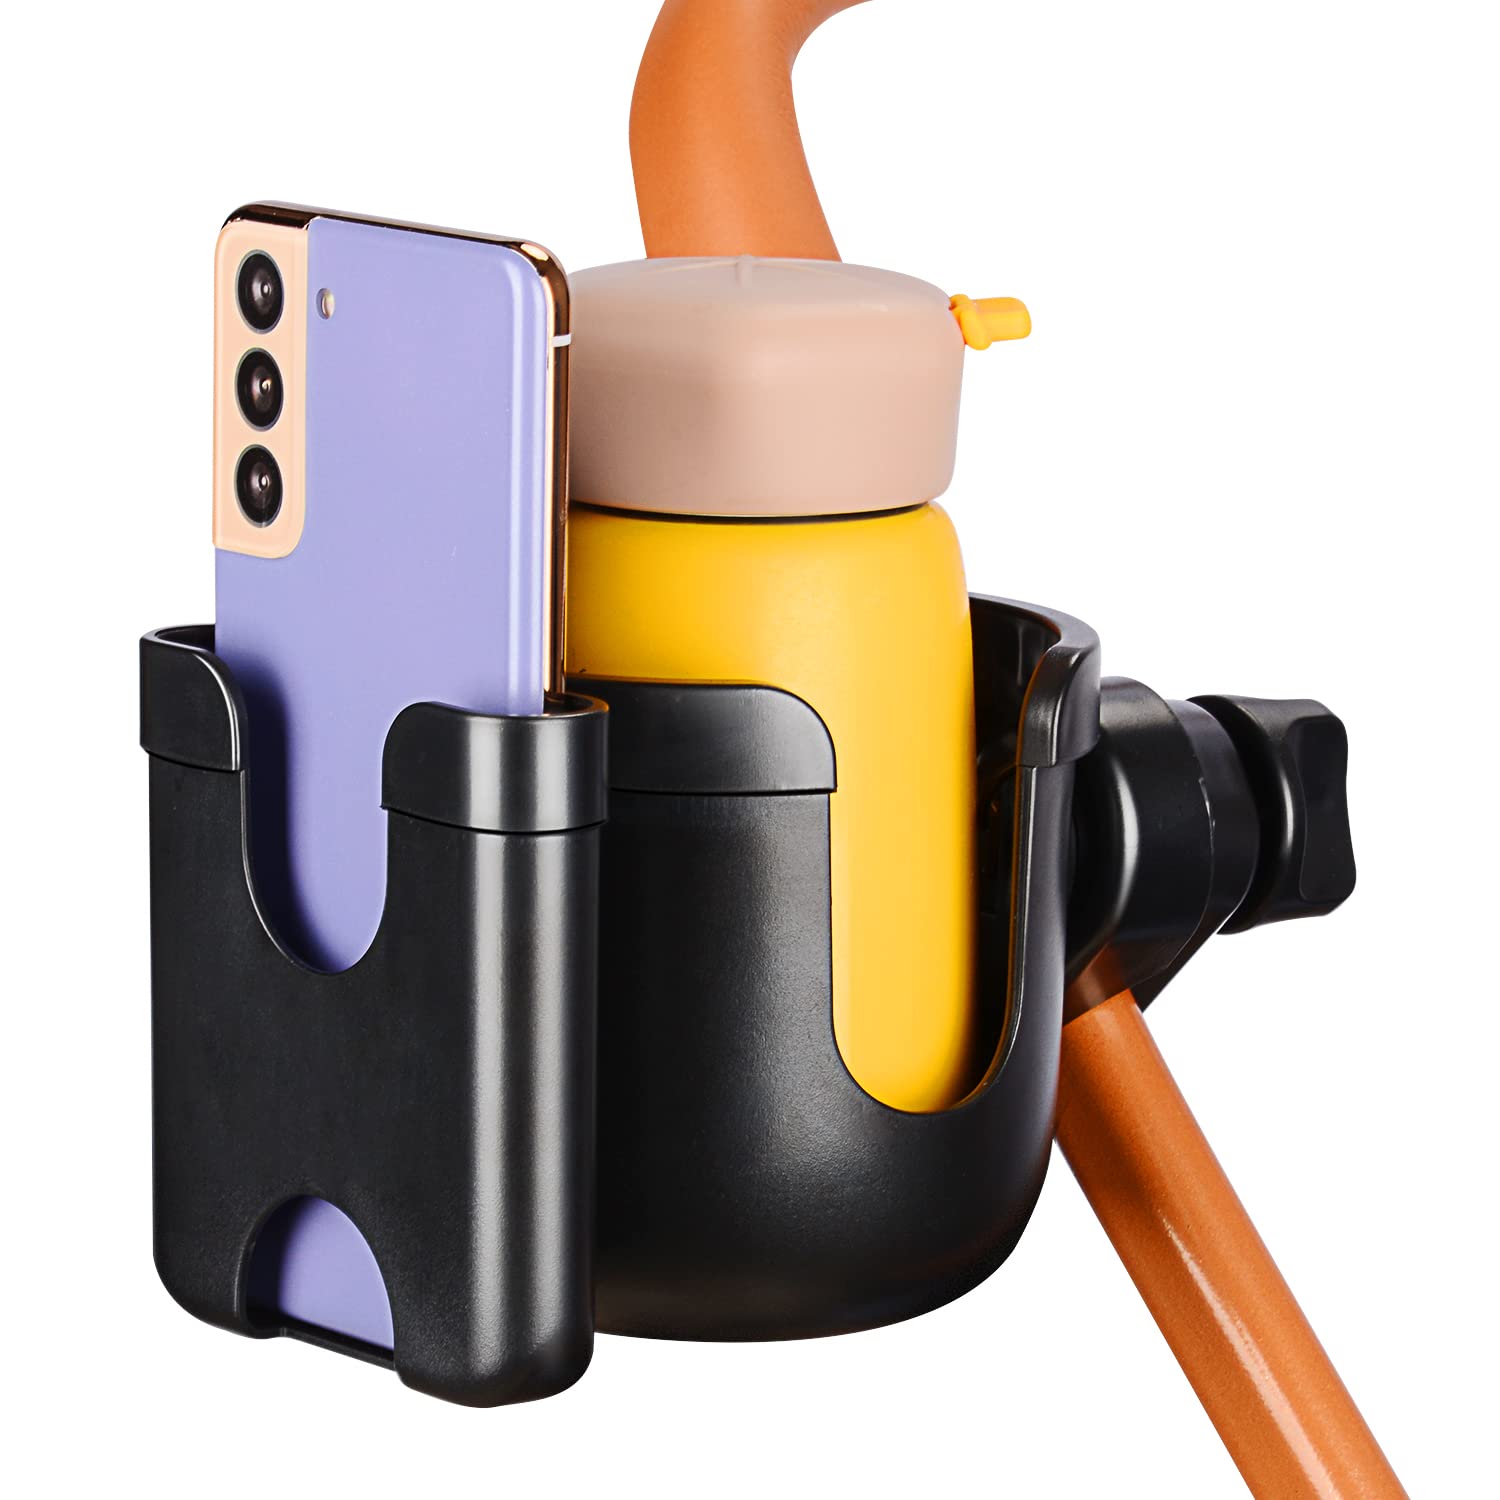 supregear Universal Cup and Phone Holder, 360 Degree Rotation 2-in-1 Parent Cup Holder Water Bottle Holder Phone Holder for Stroller Walker Bike, Bla